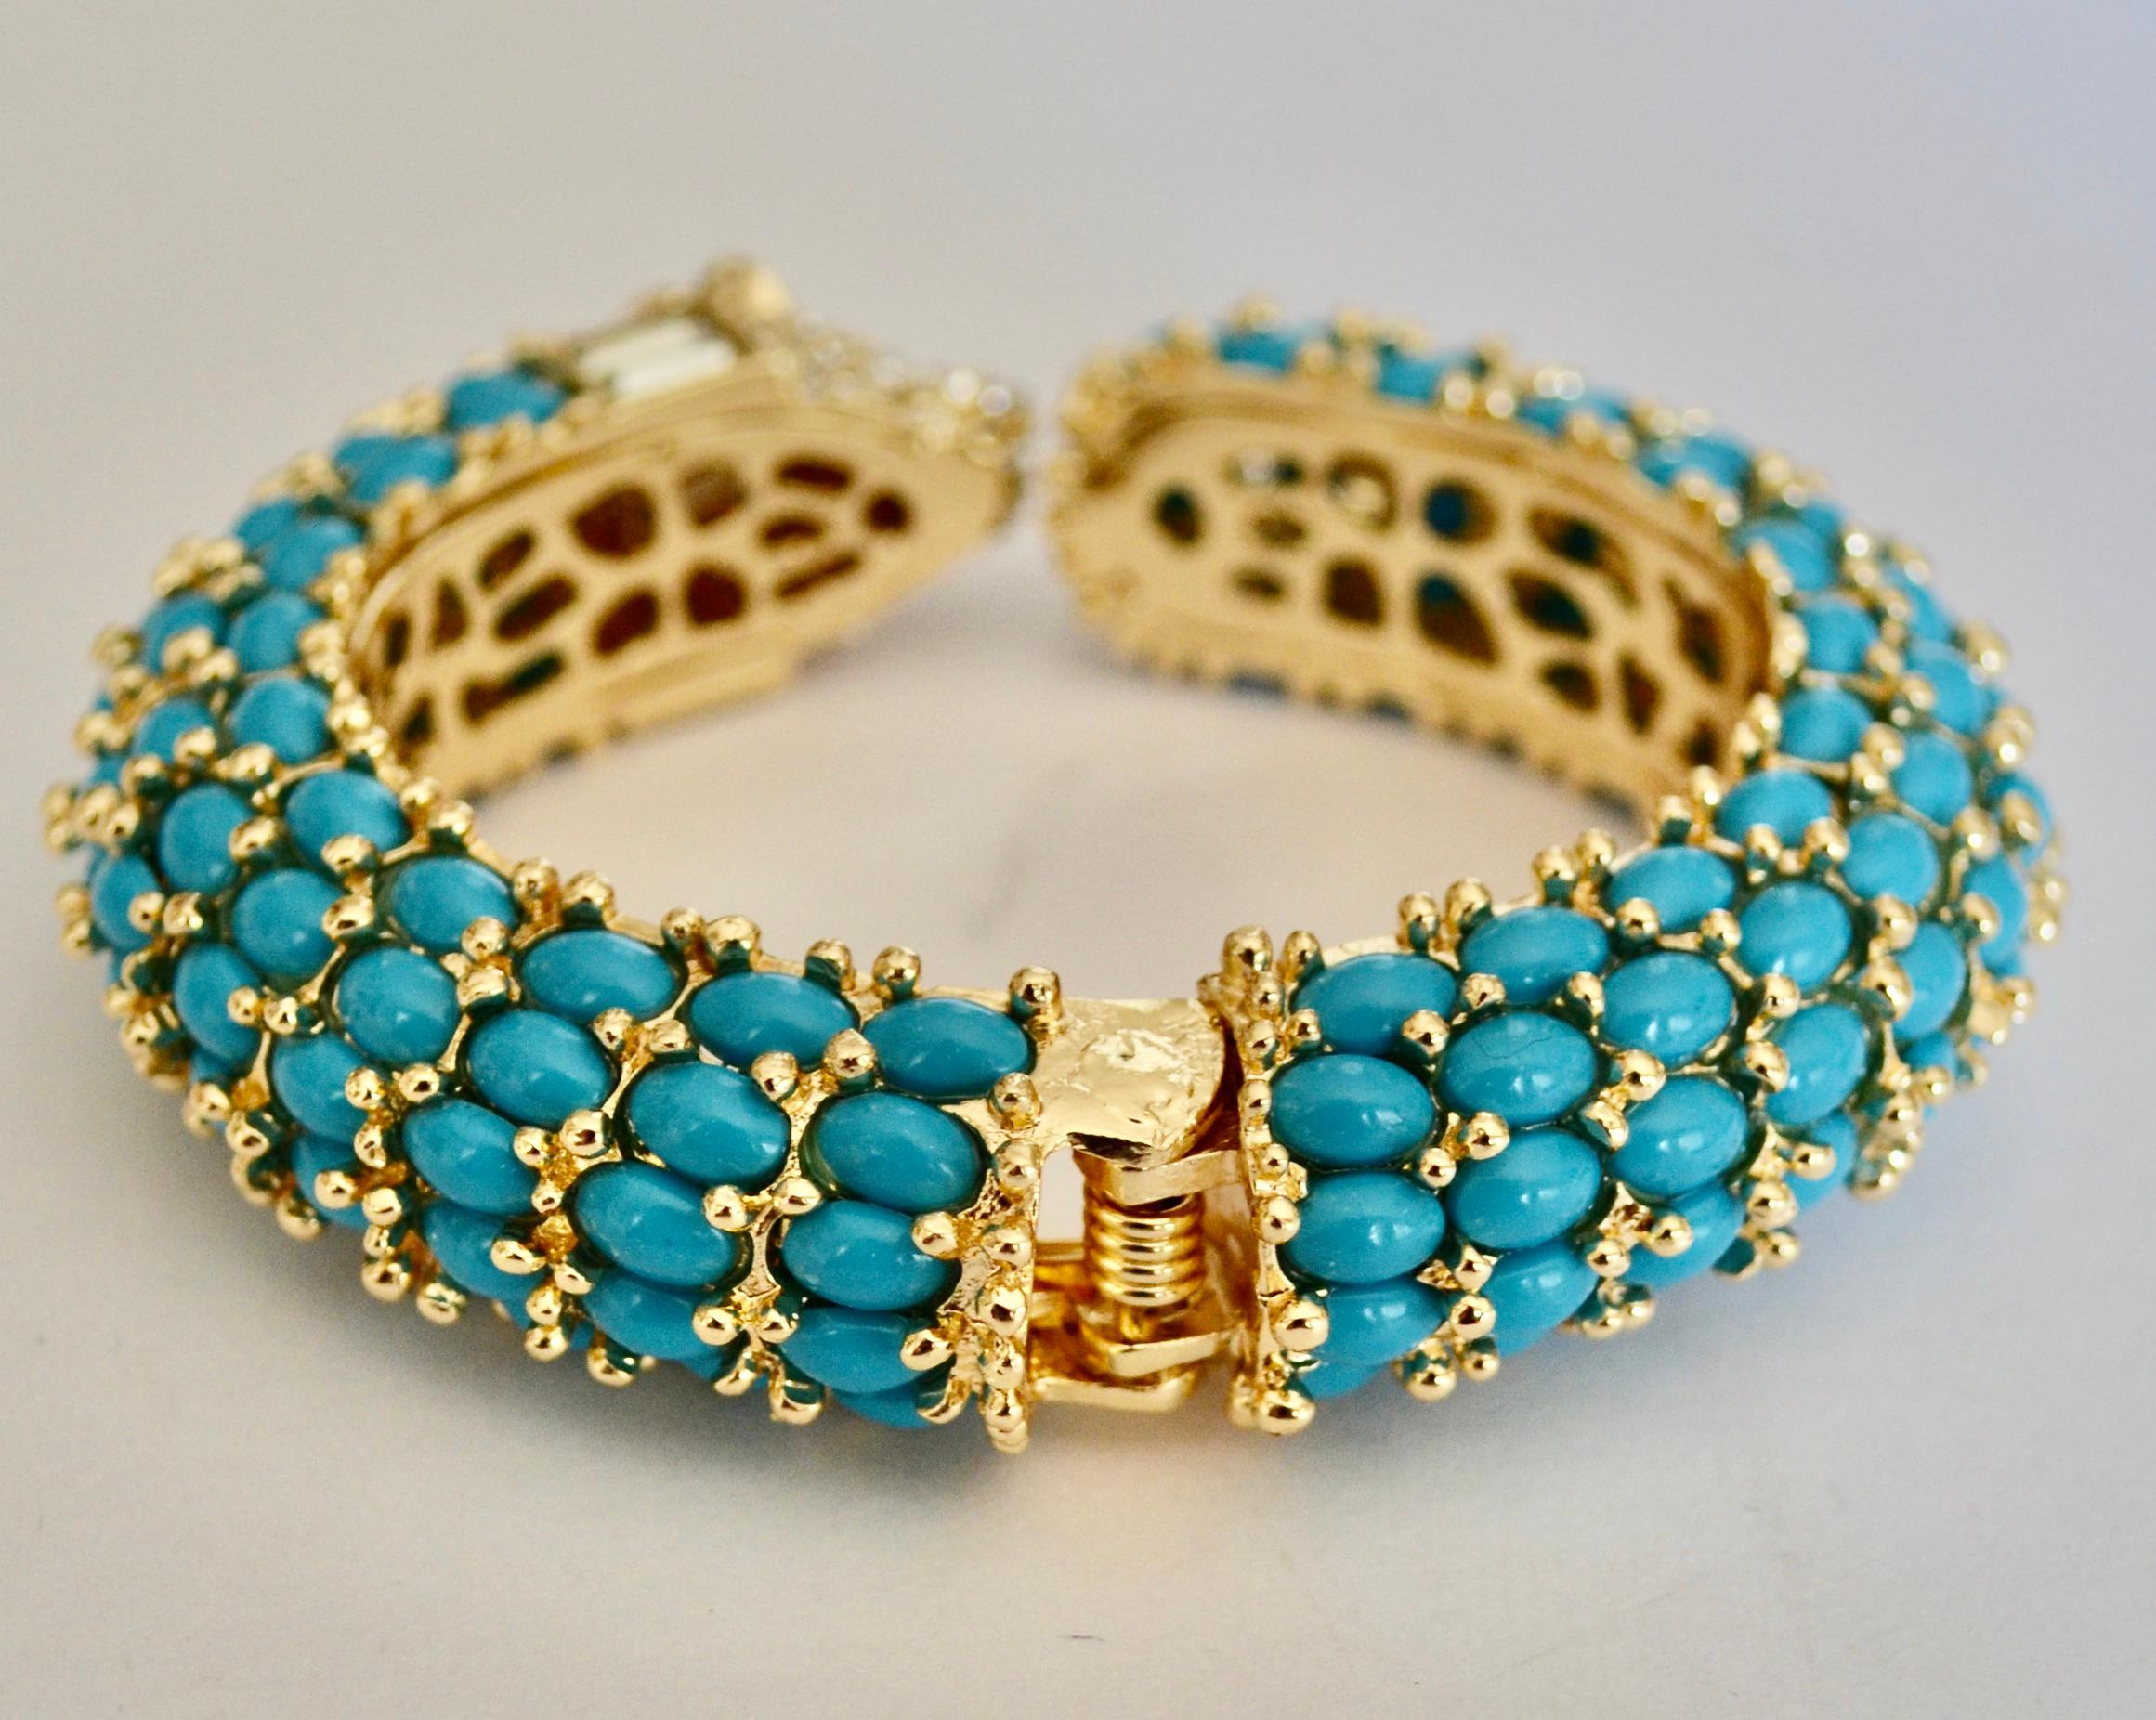 Statement bracelet in turquoise resin and zircon . Hinged bracelet.
French designer.